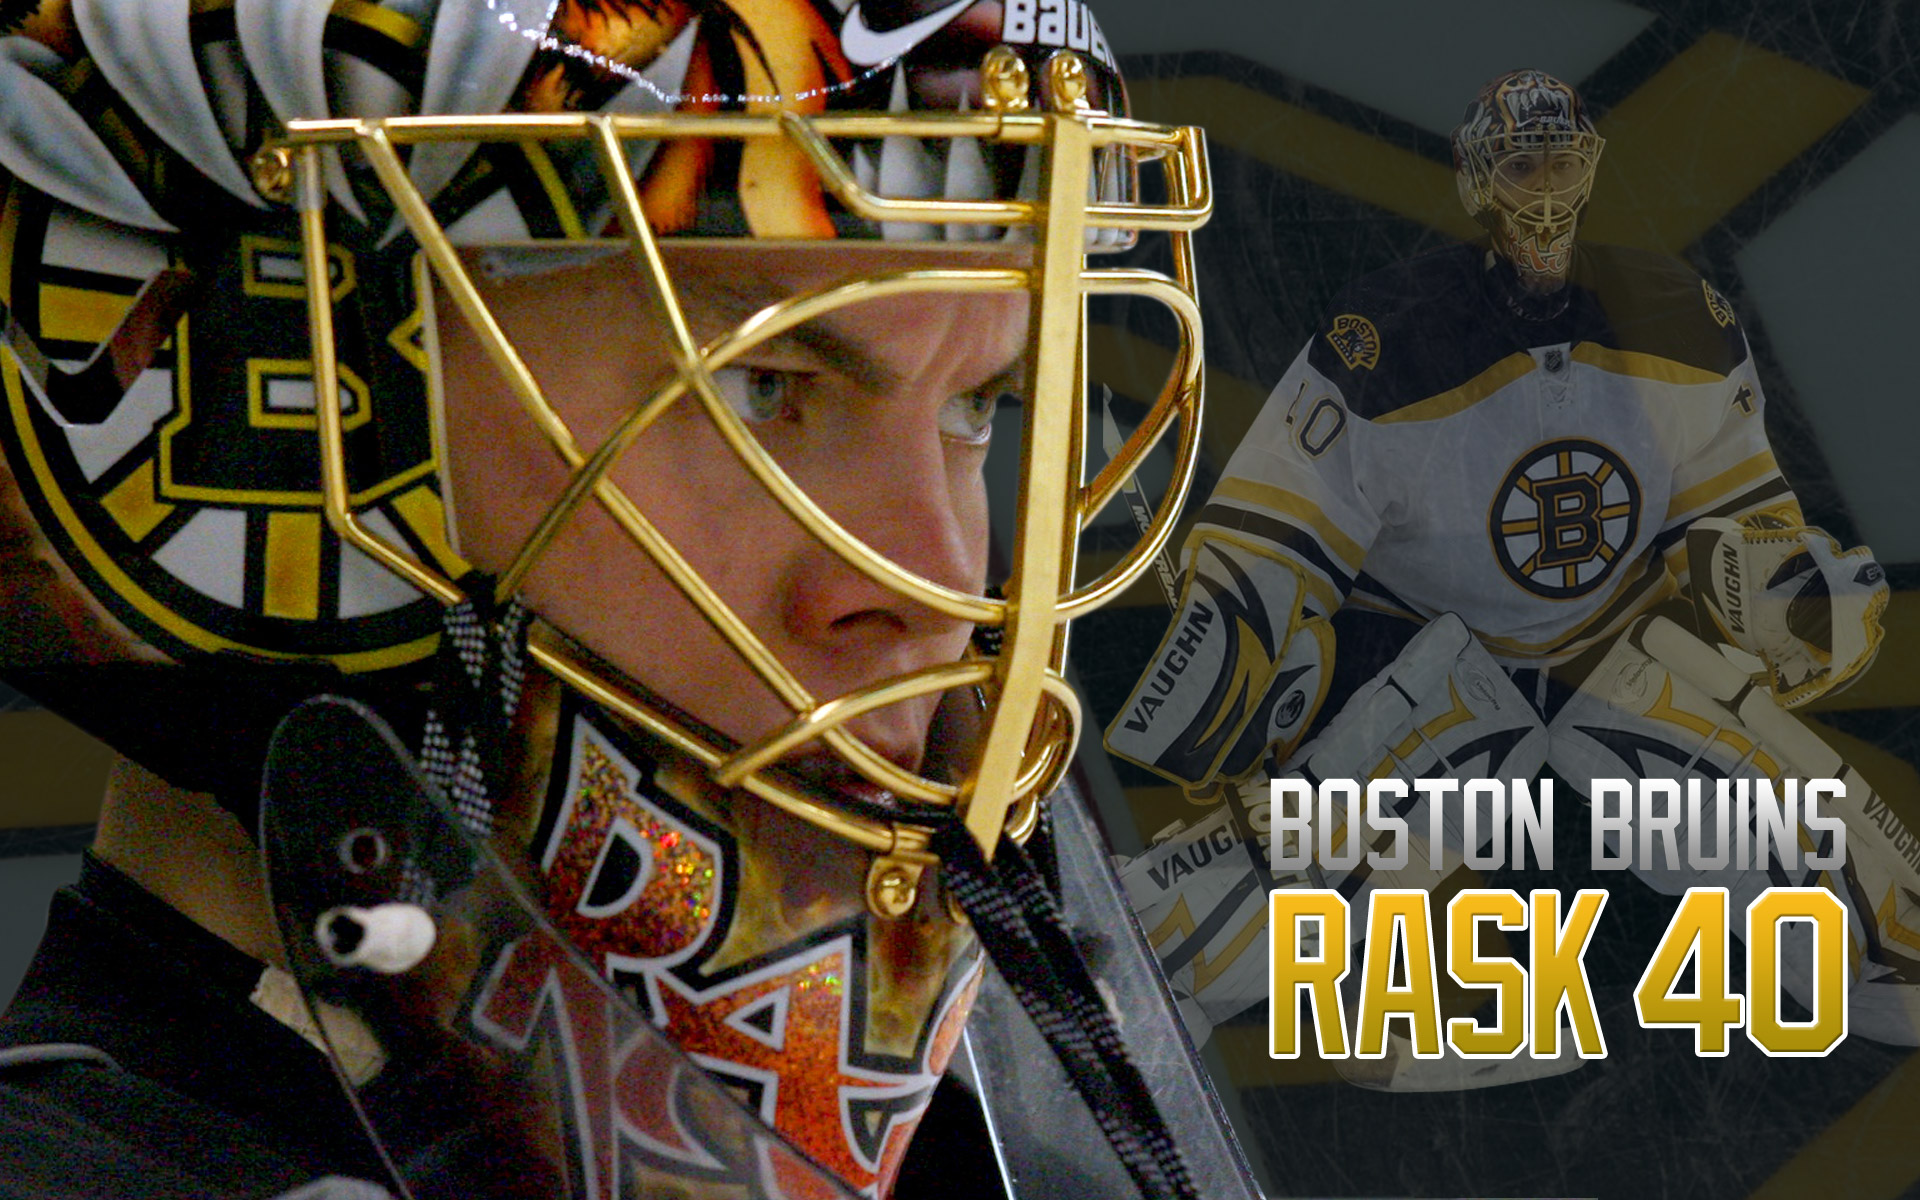 Nhl Boston Bruins Rask N40 Wallpaper Photos